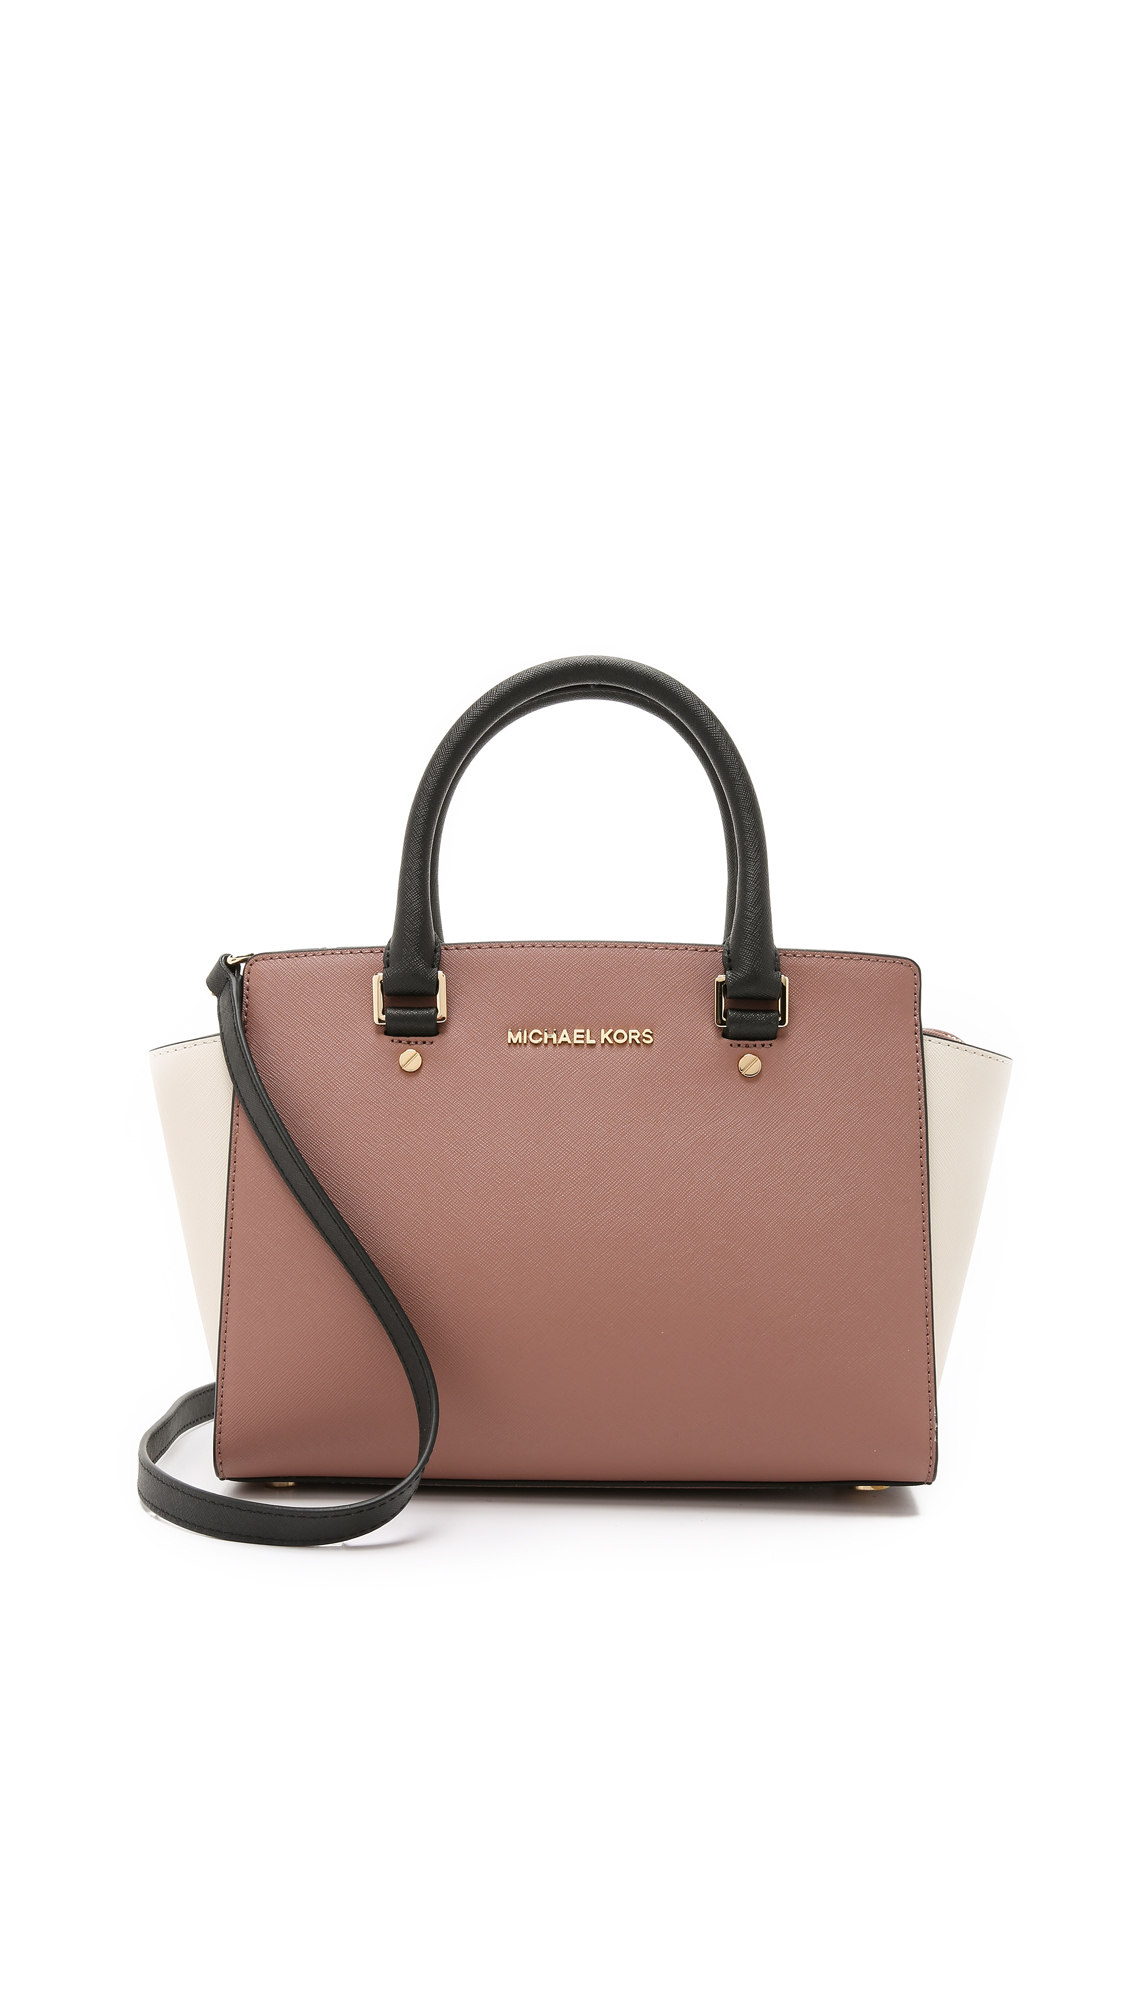 SALE Michael Kors Selma fawn gold grommets medium beige pink satchel purse